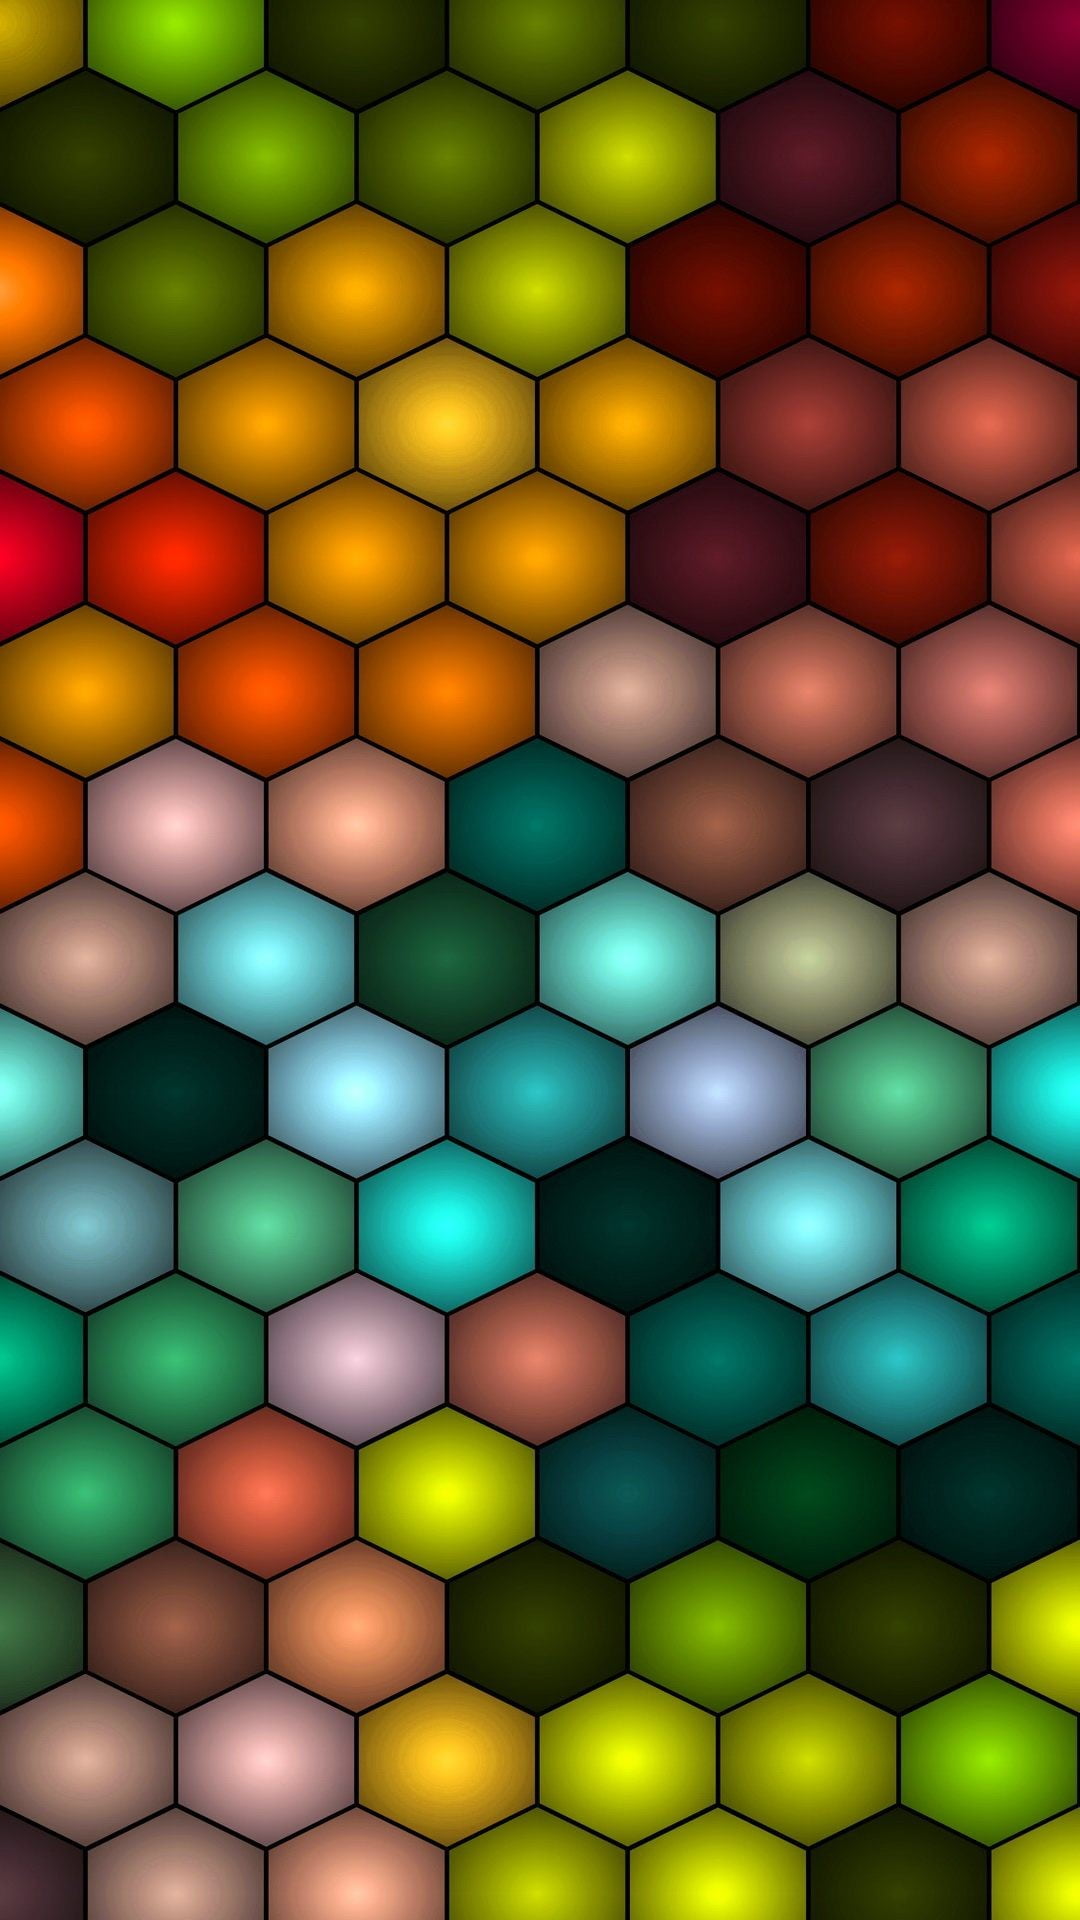 Gold Honeycomb Dark Background Wallpaper Image For Free Download - Pngtree